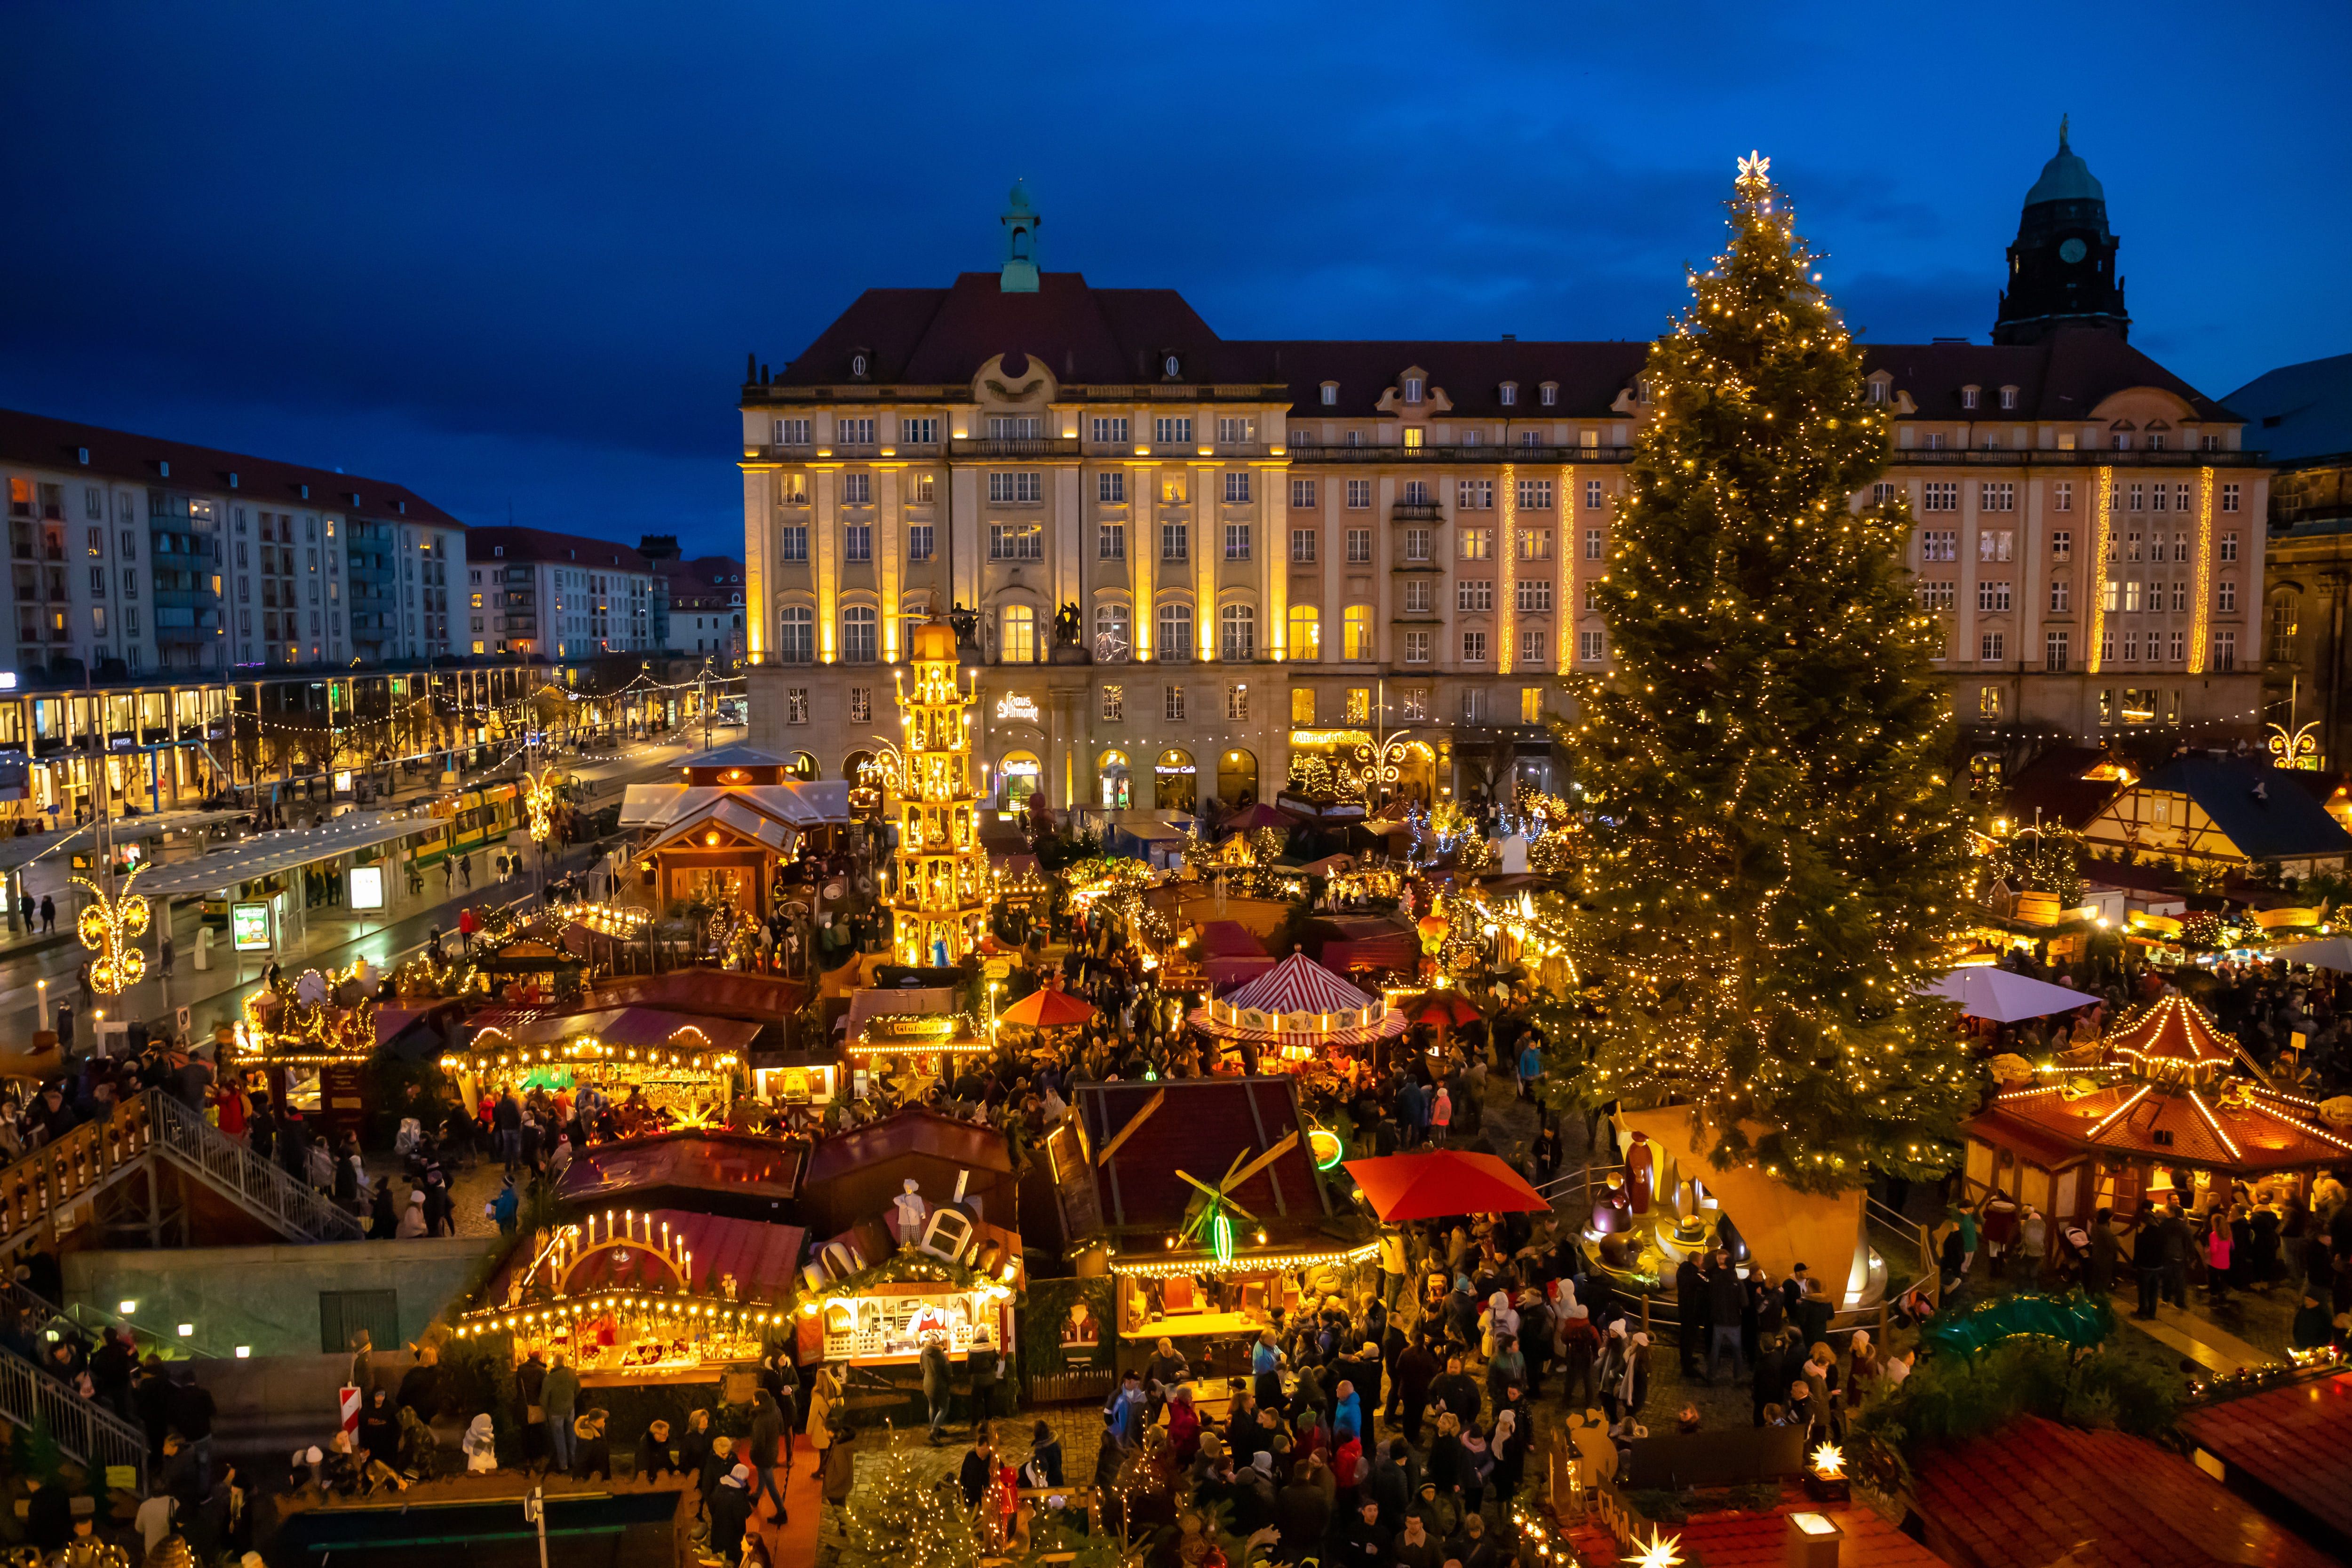 christmas-market-striezelmarkt-in-dresden-germany-2022-11-16-13-38-45-utc (1).jpg